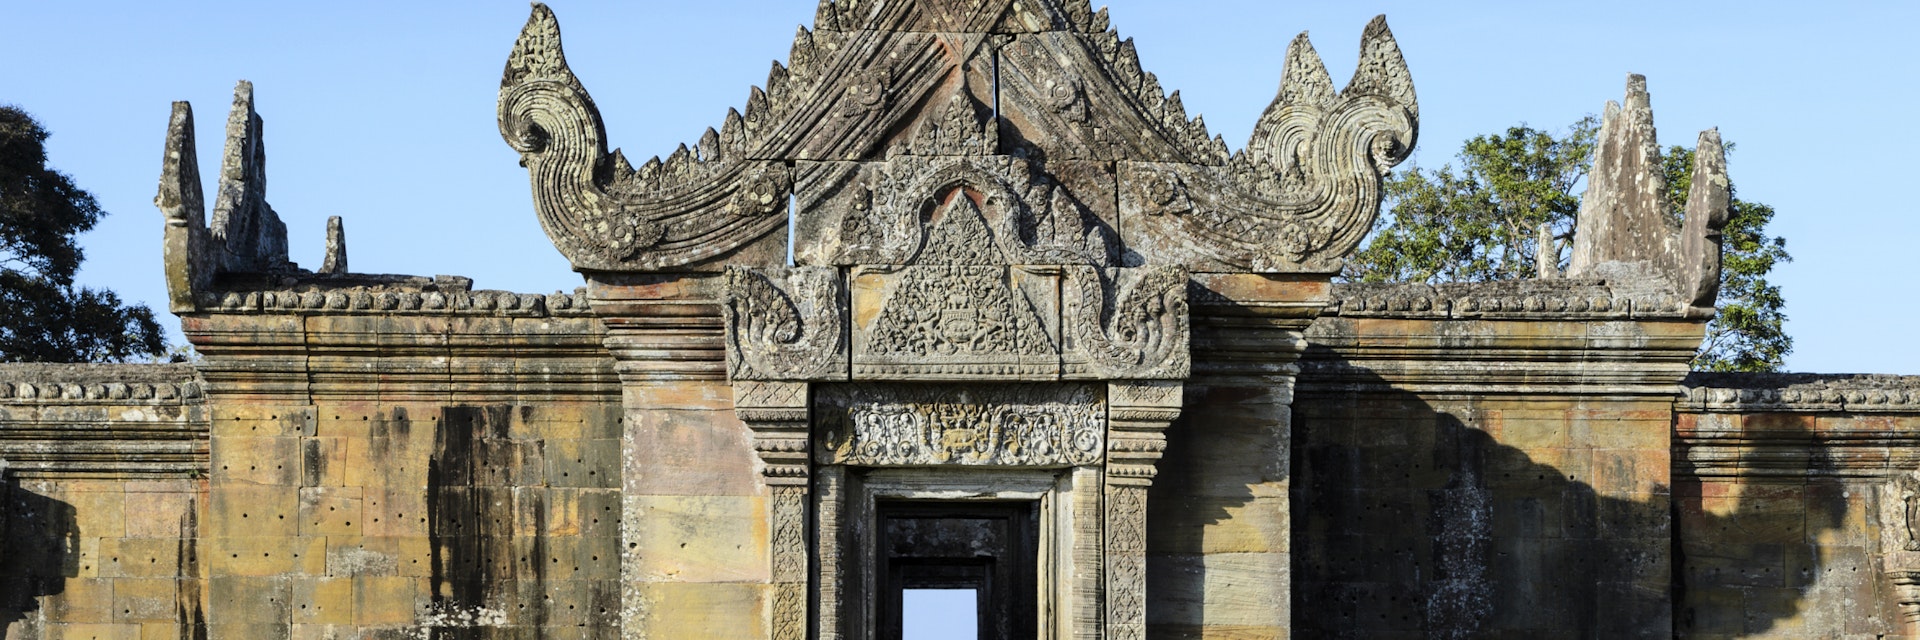 Preah Vihear Angkor temple